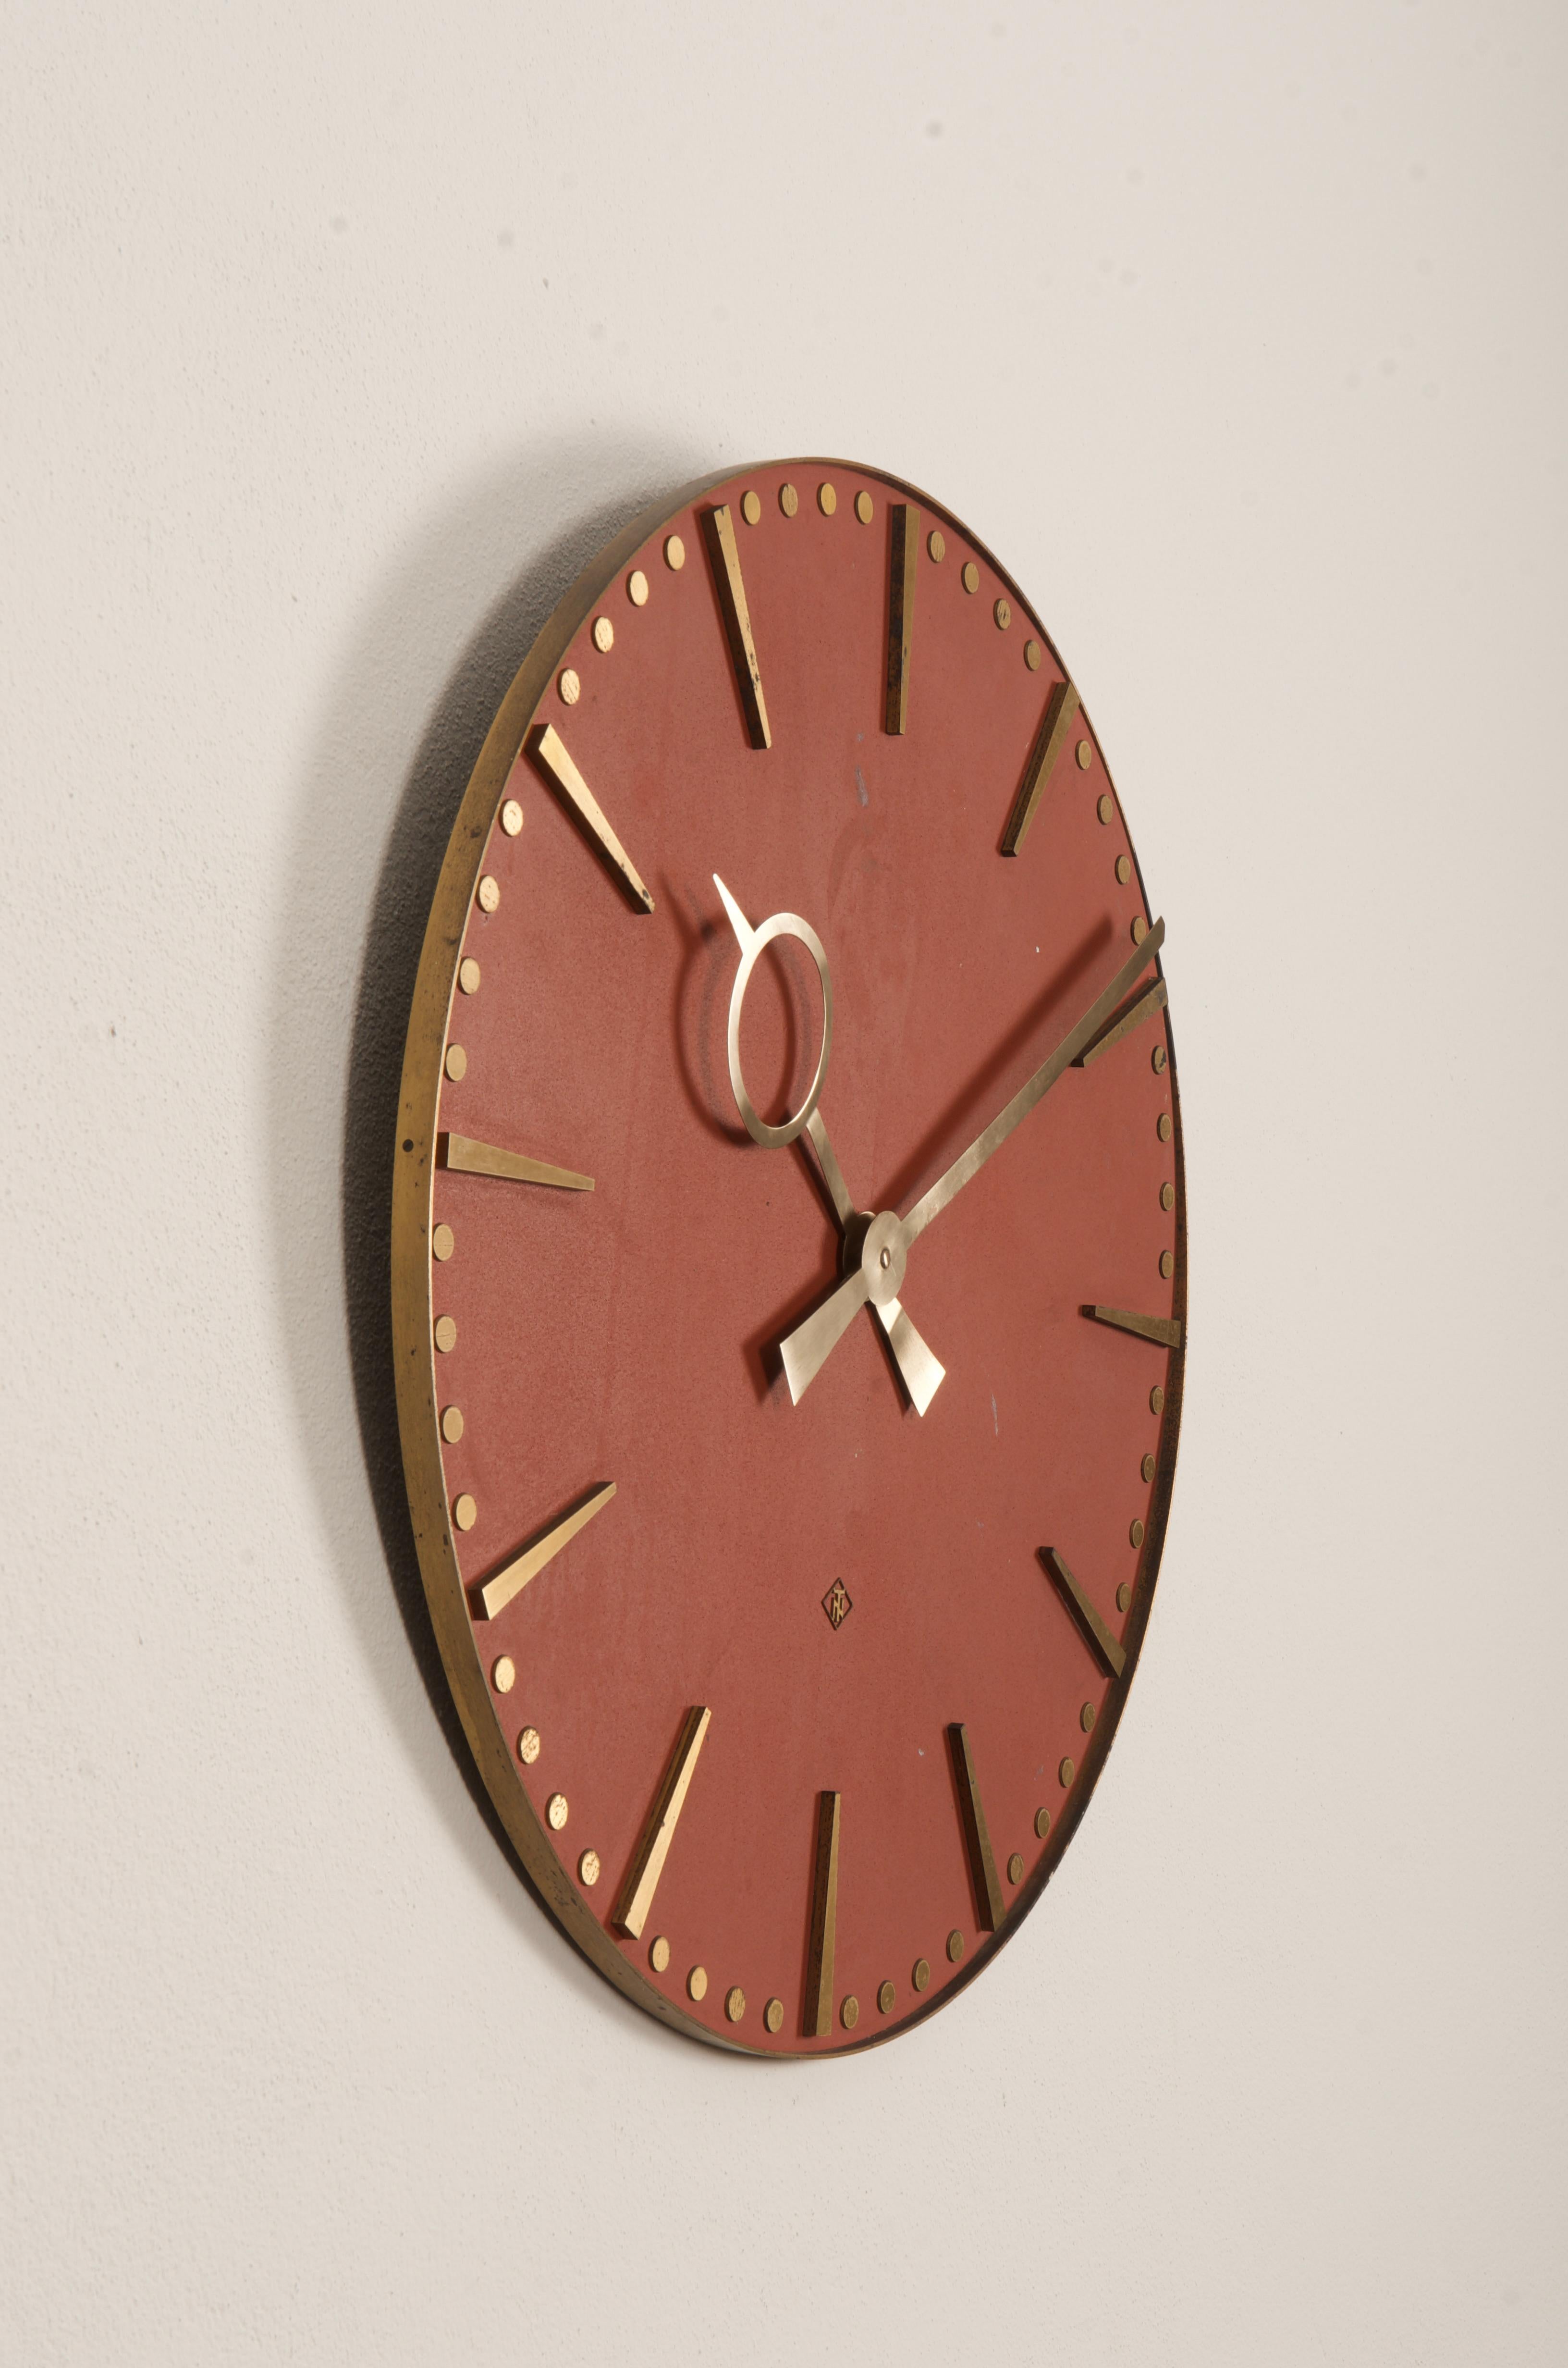 Industrial Huge German TN Telenorma Brass Wall Clock For Sale